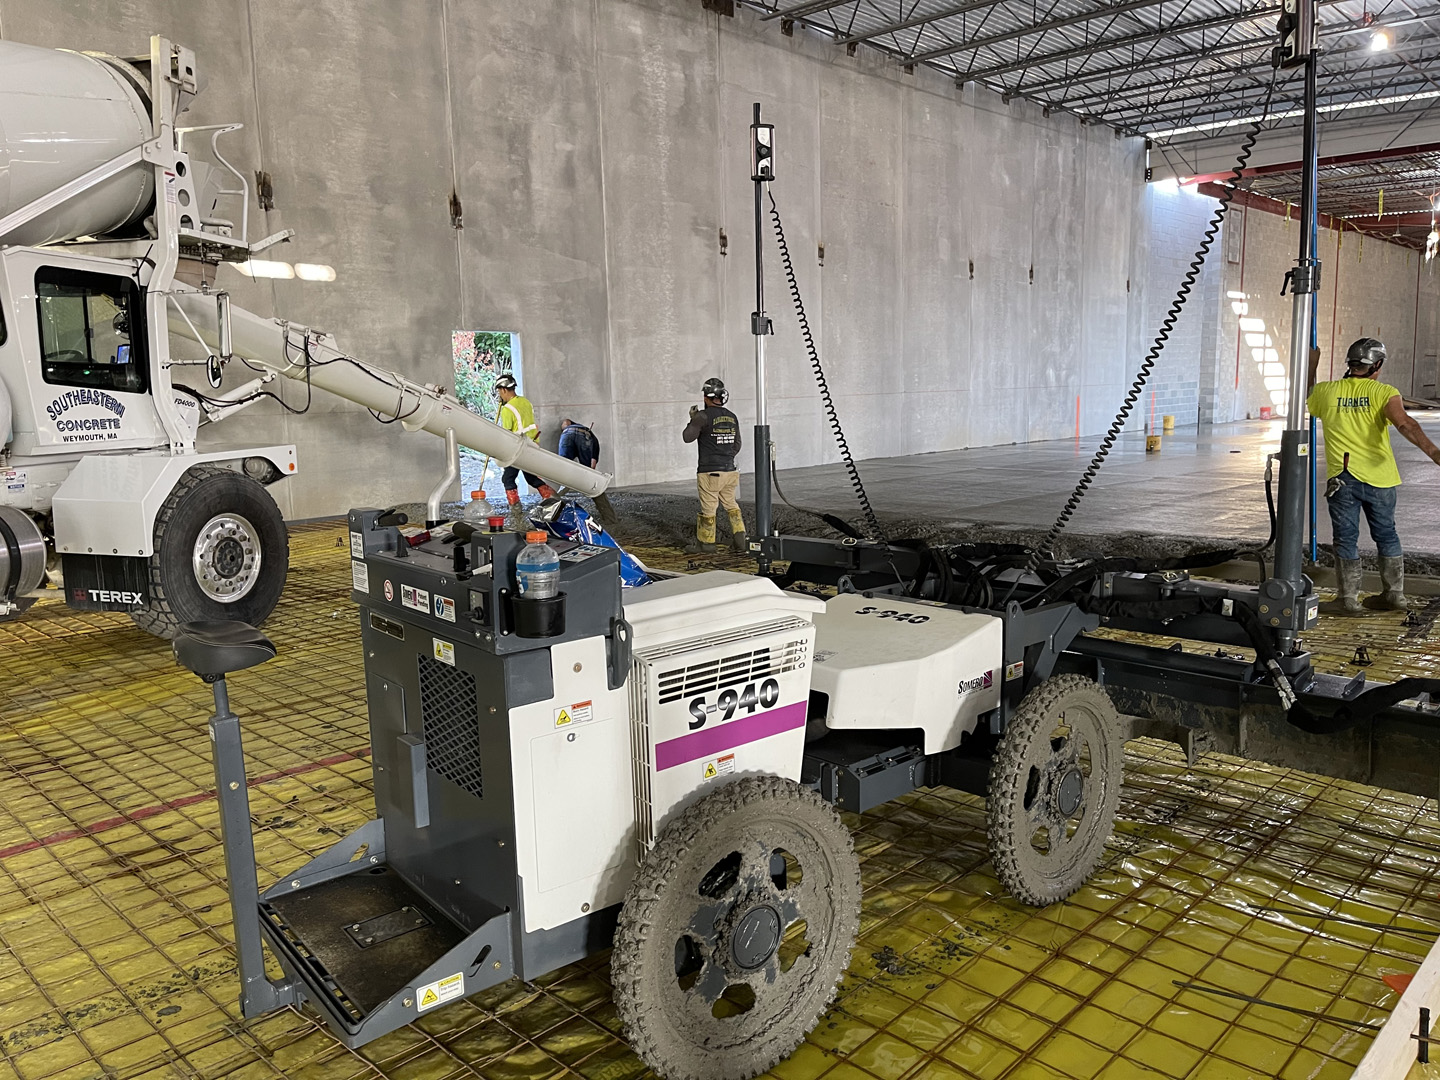 Laser screen machine flattening interior concrete